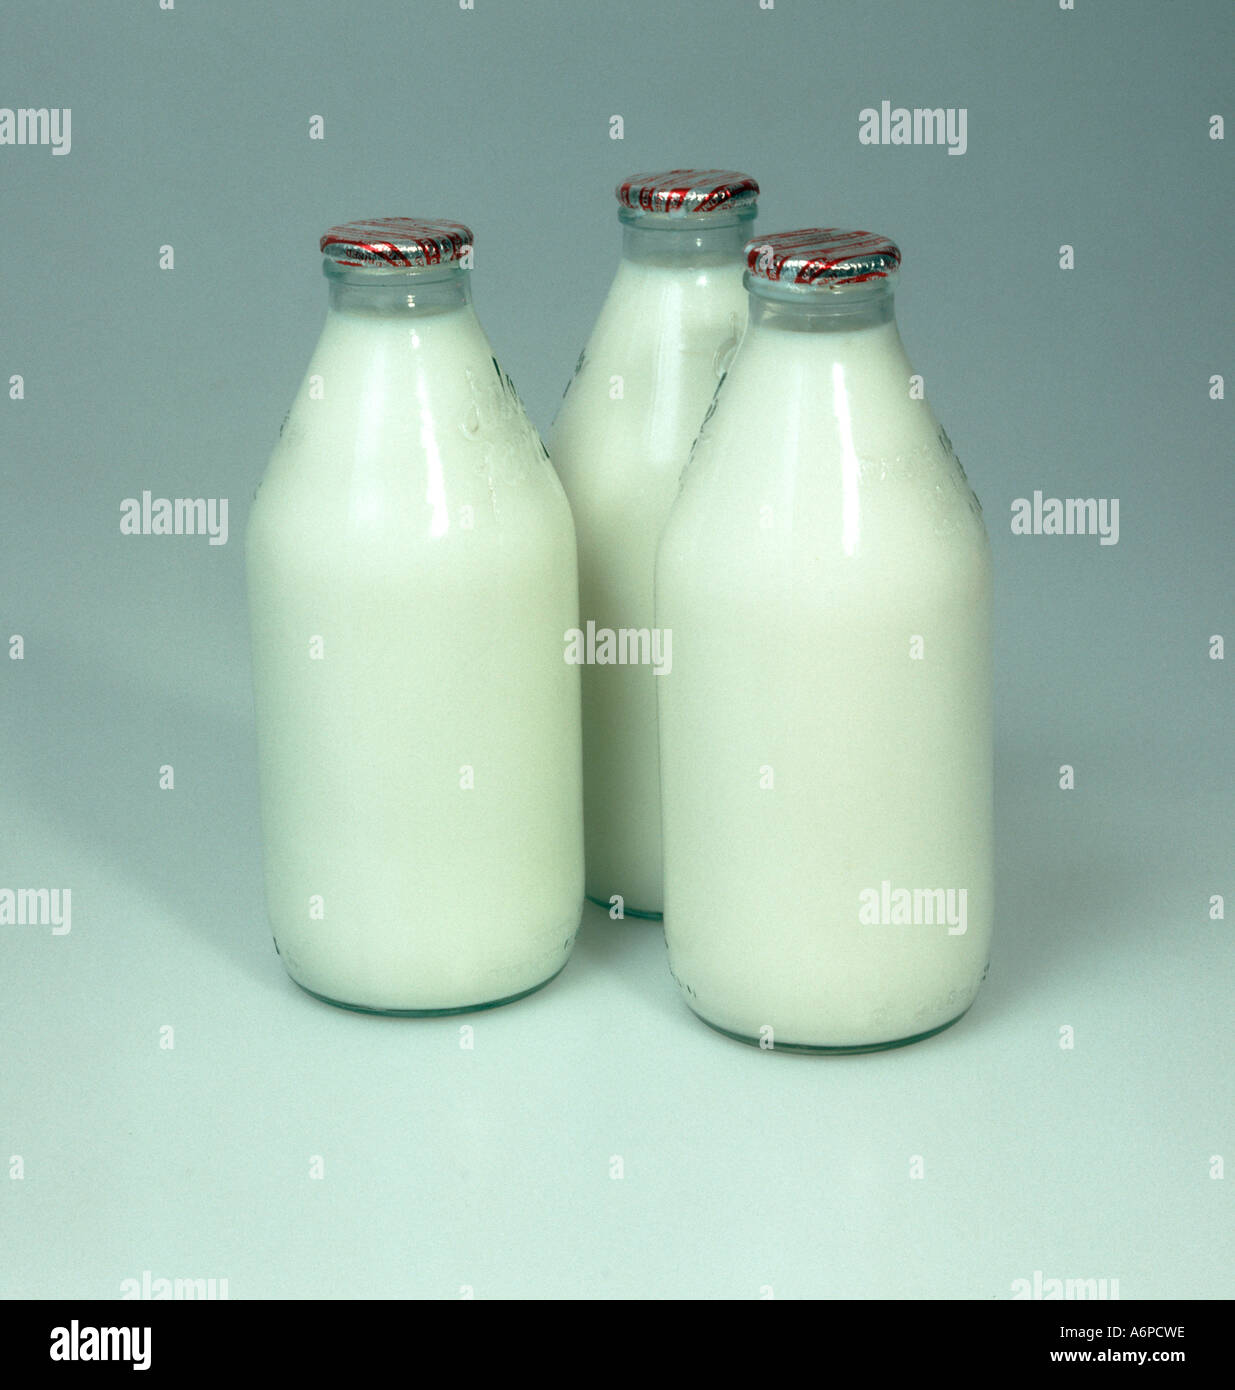 Three full glass milk bottles Stock Photo